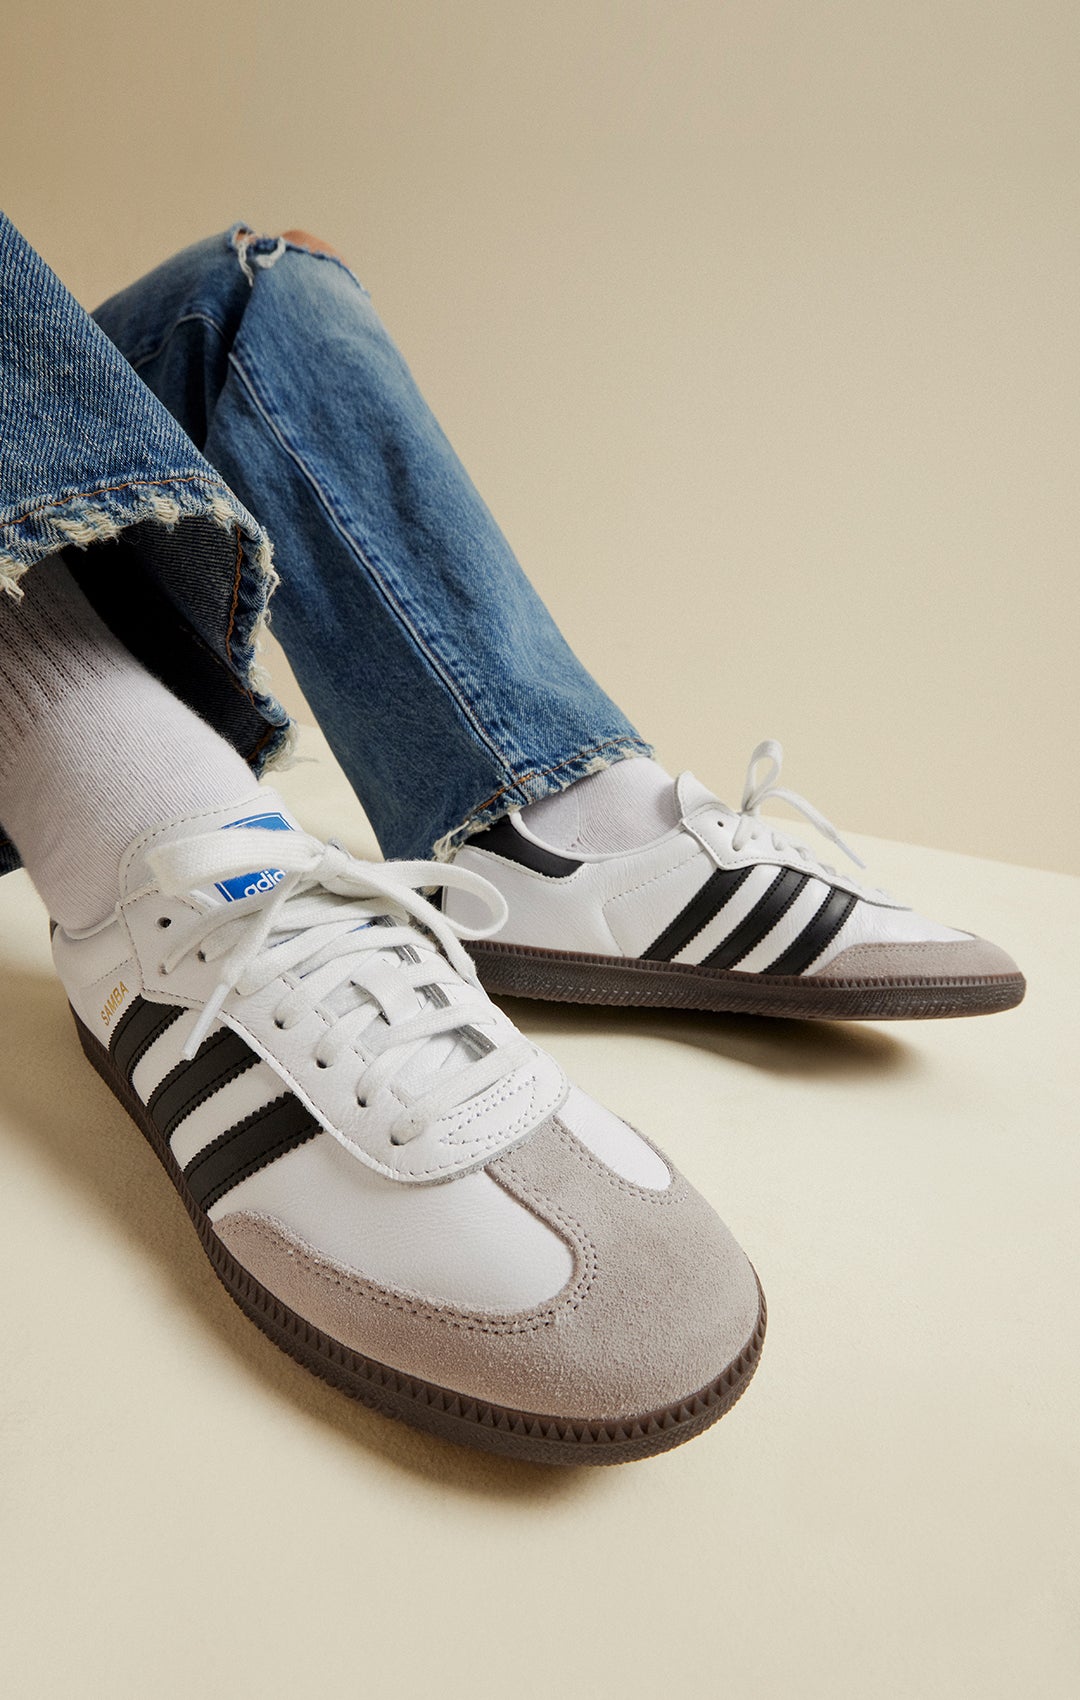 adidas - The Equipment Years | Sneakers men fashion, Kicks shoes, Sneakers  fashion